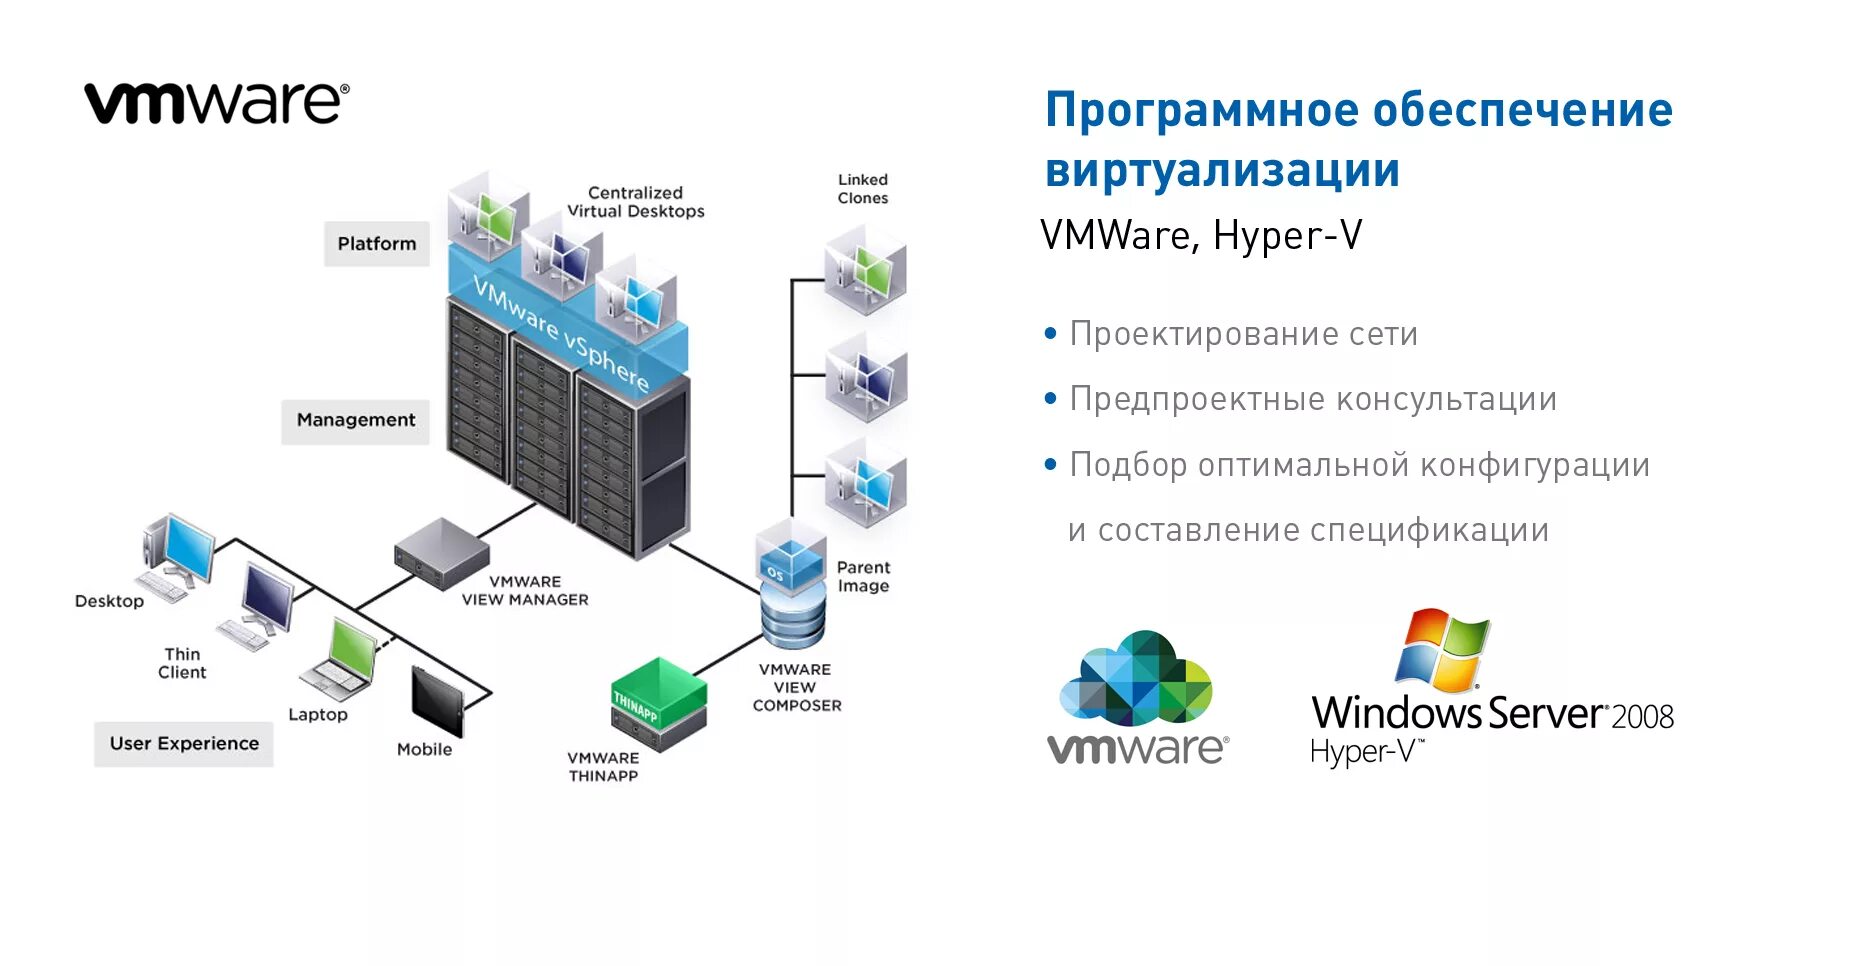 Система виртуализации VMWARE. Программная виртуализация схема. Программный пакет виртуализации VMWARE. Виртуализация серверов VMWARE.